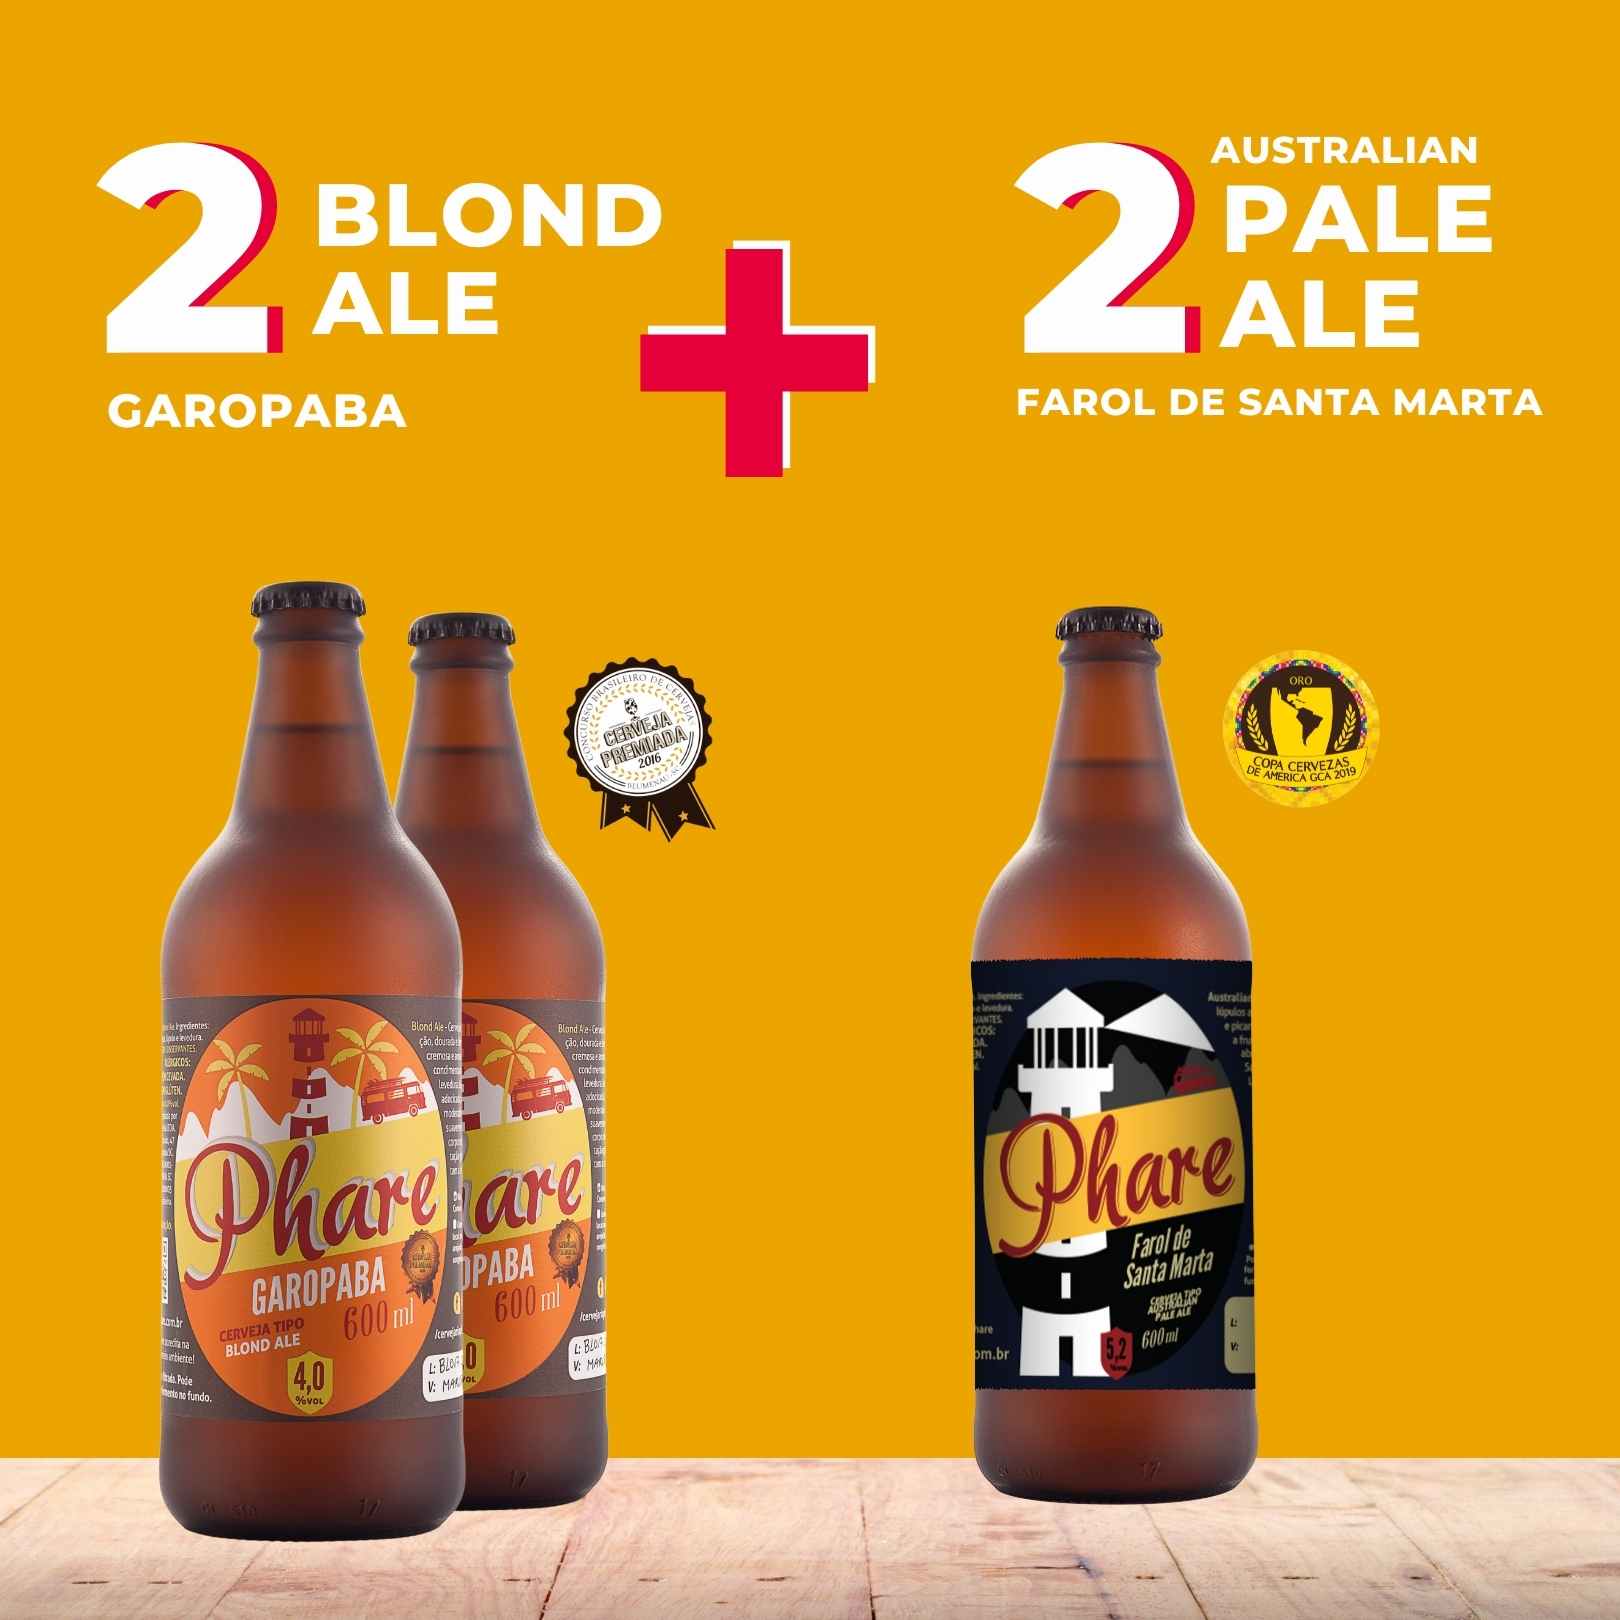 Kit com 4 Cervejas - 2  Farol de Santa Marta (Australian Pale Ale) + 2  Garopaba (Blond Ale) - 600ml